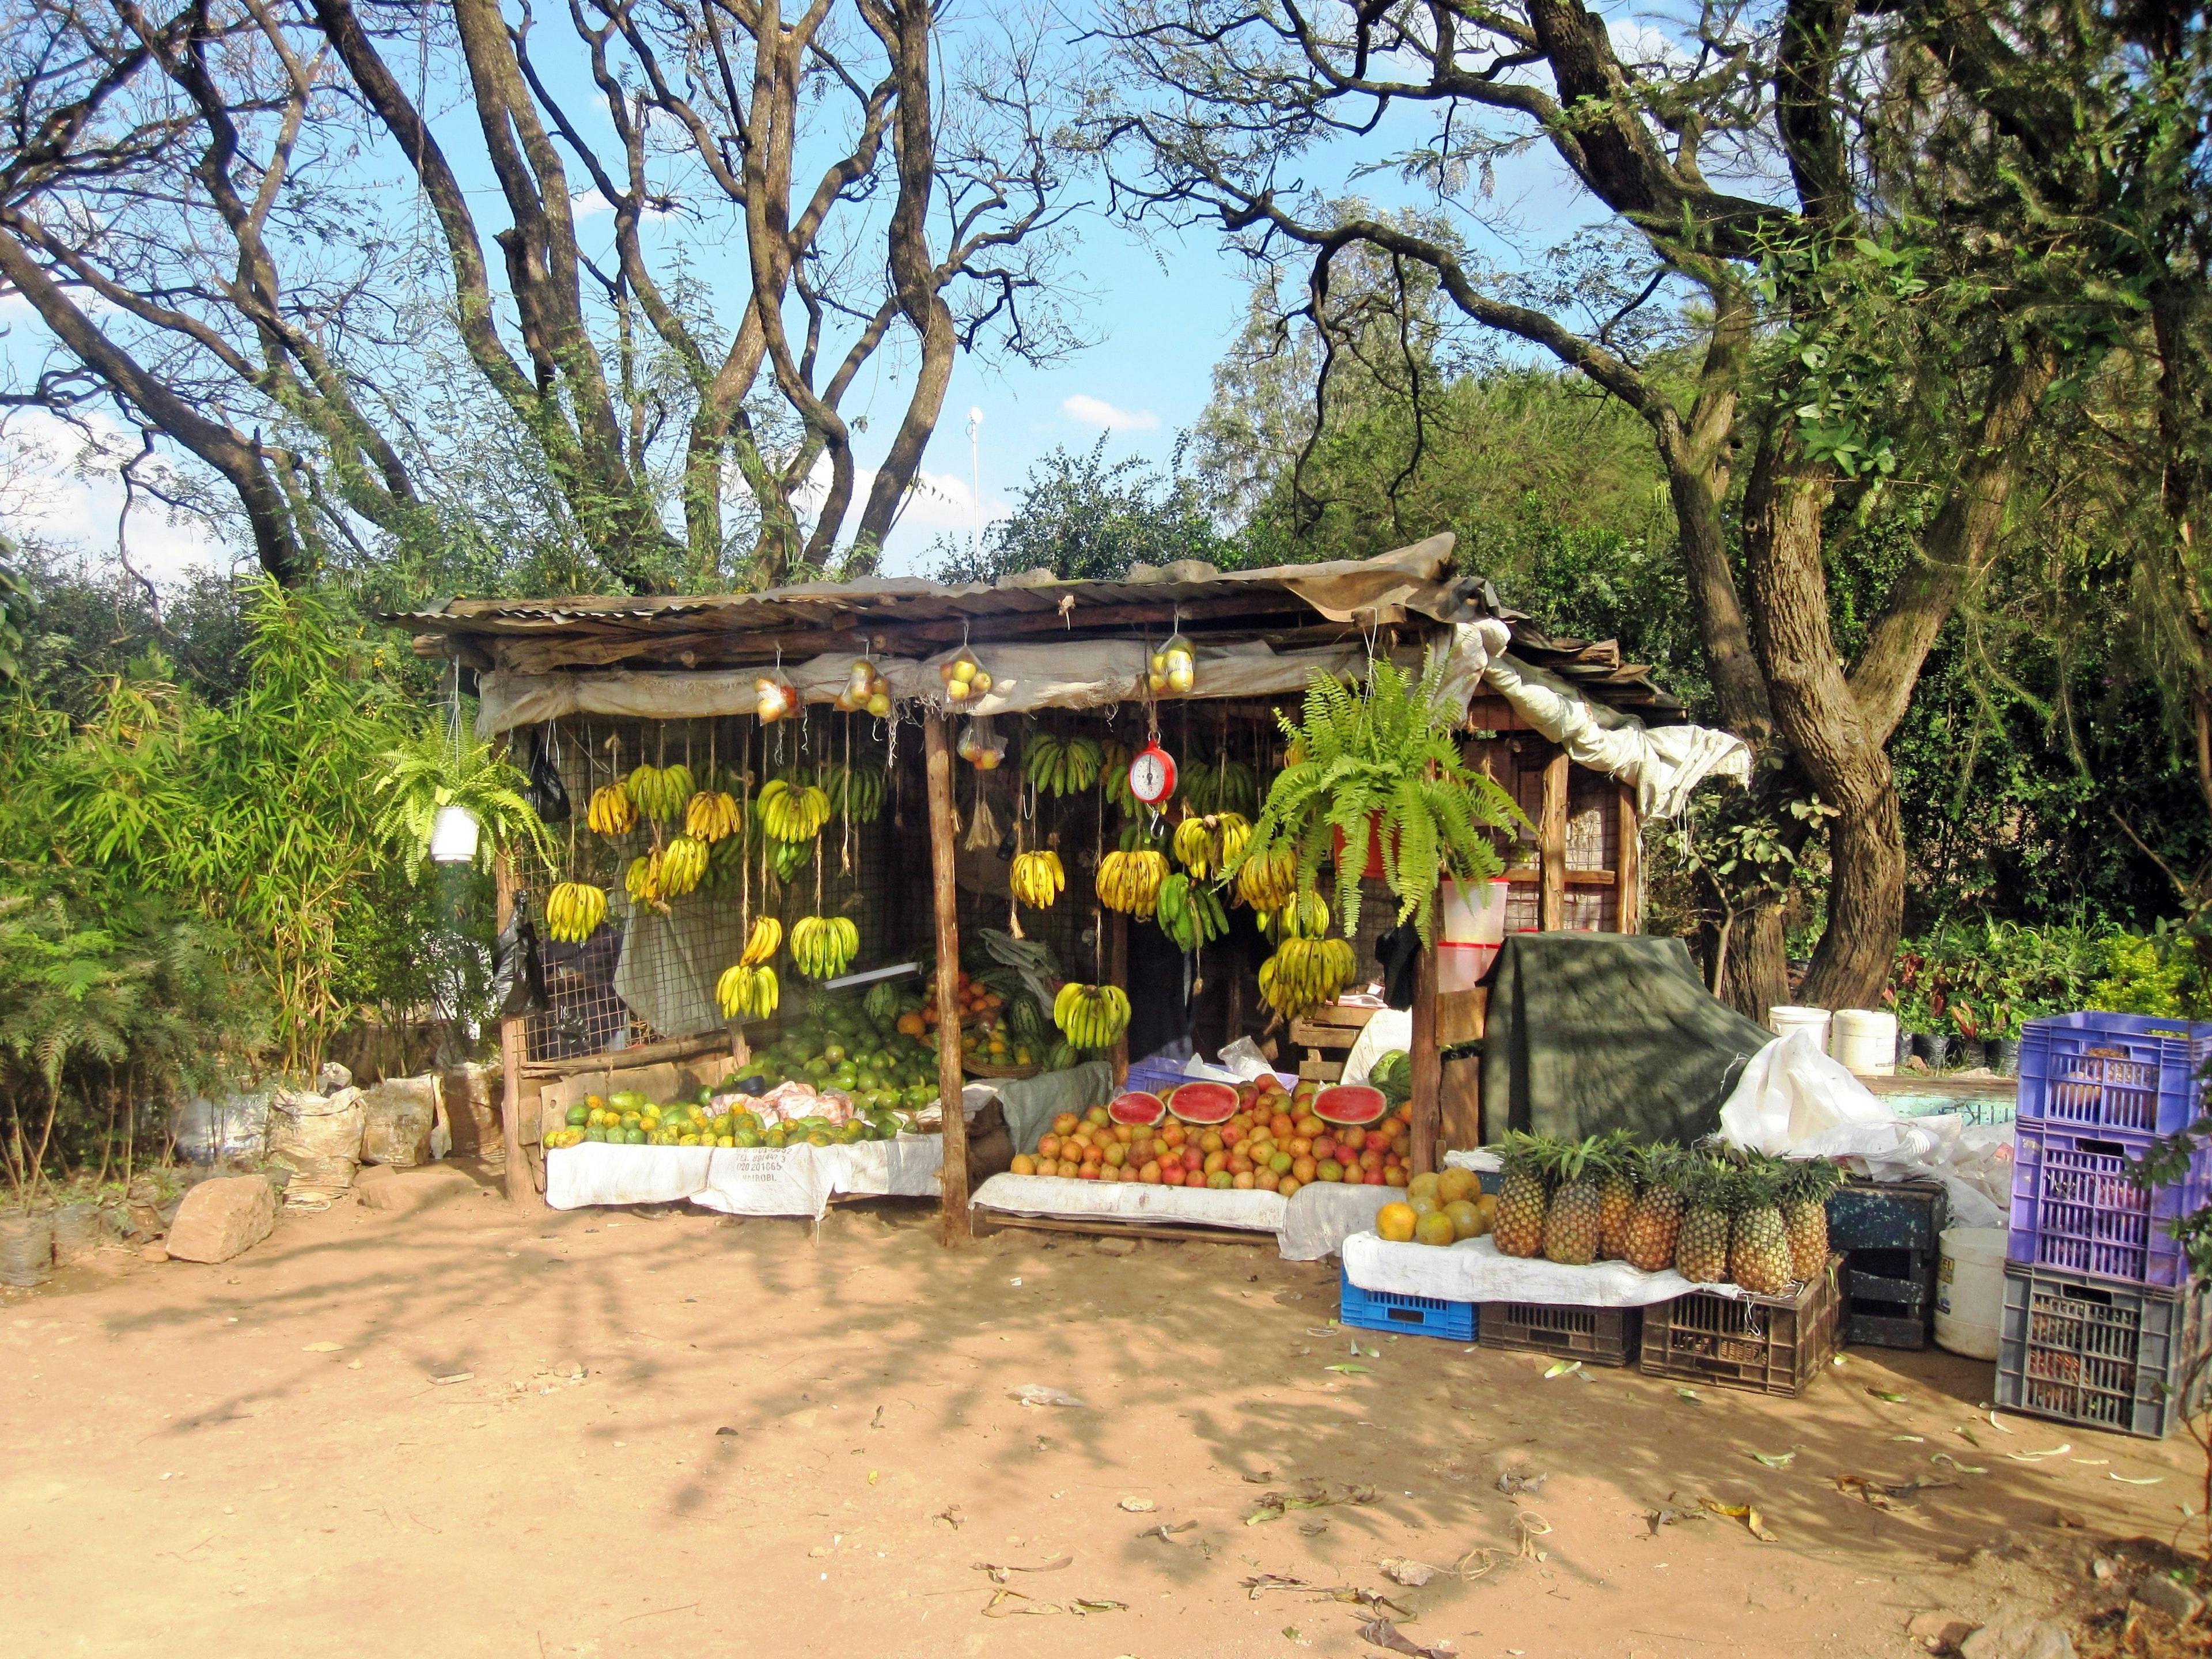 Fruit stall in Nairobi Kenya.